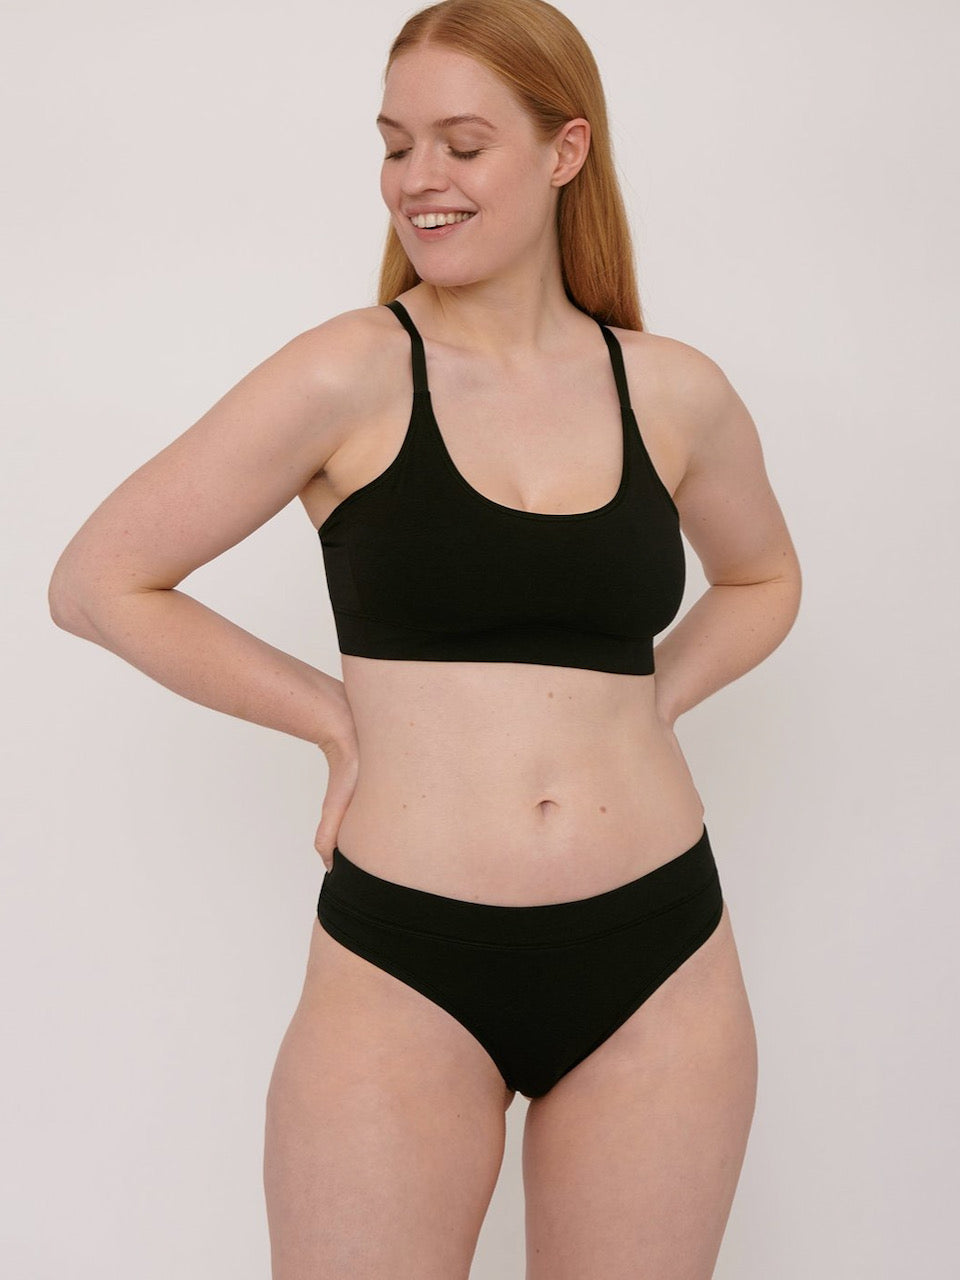 A woman wearing an Organic Basics Basic Bra ⋅ organic cotton - Black bikini top.